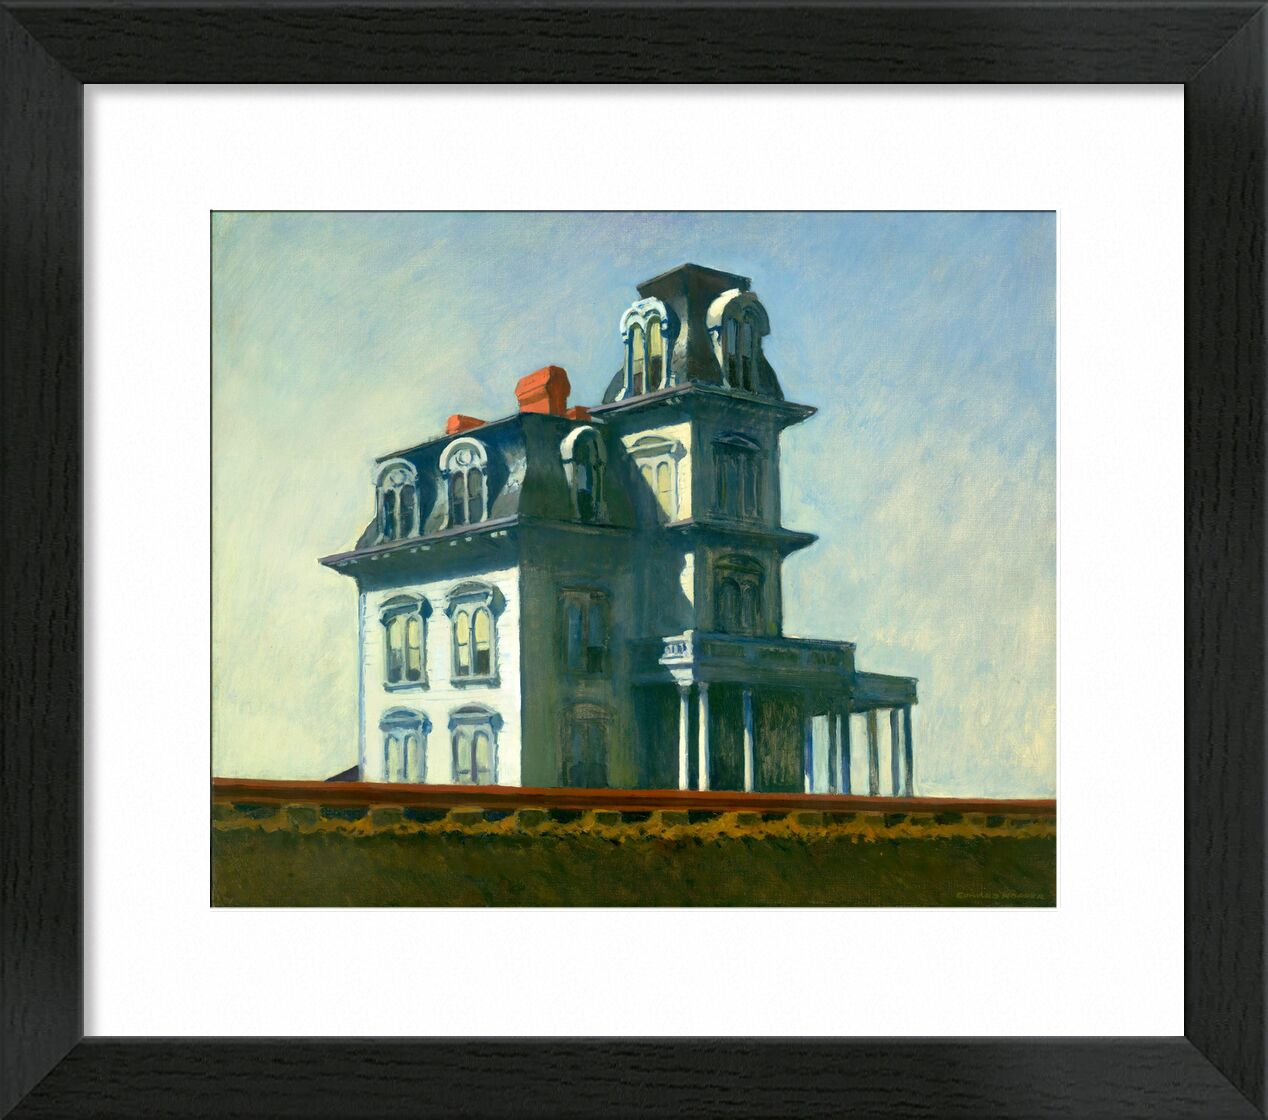 Casa Junto al Ferrocarril - Edward Hopper desde Bellas artes, Prodi Art, casa, pintura, cielo, azul, ferrocarril, Edward Hopper